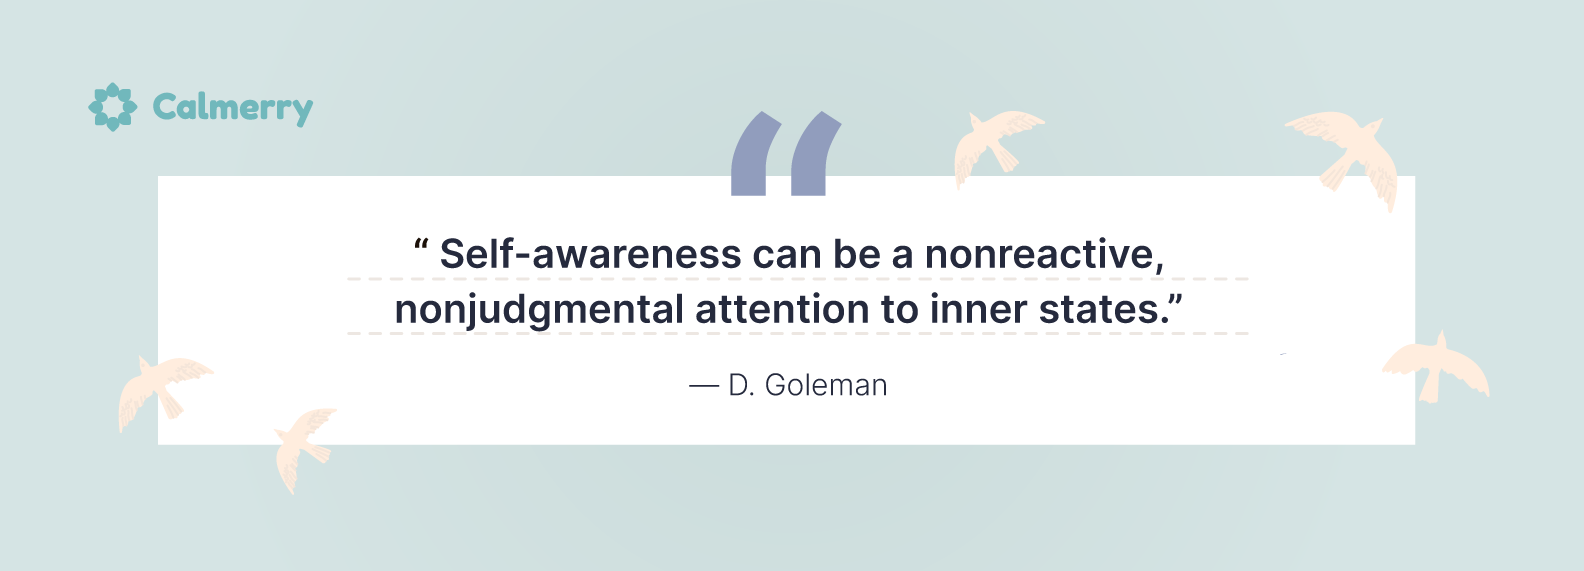 Self-awareness can be a nonreactive